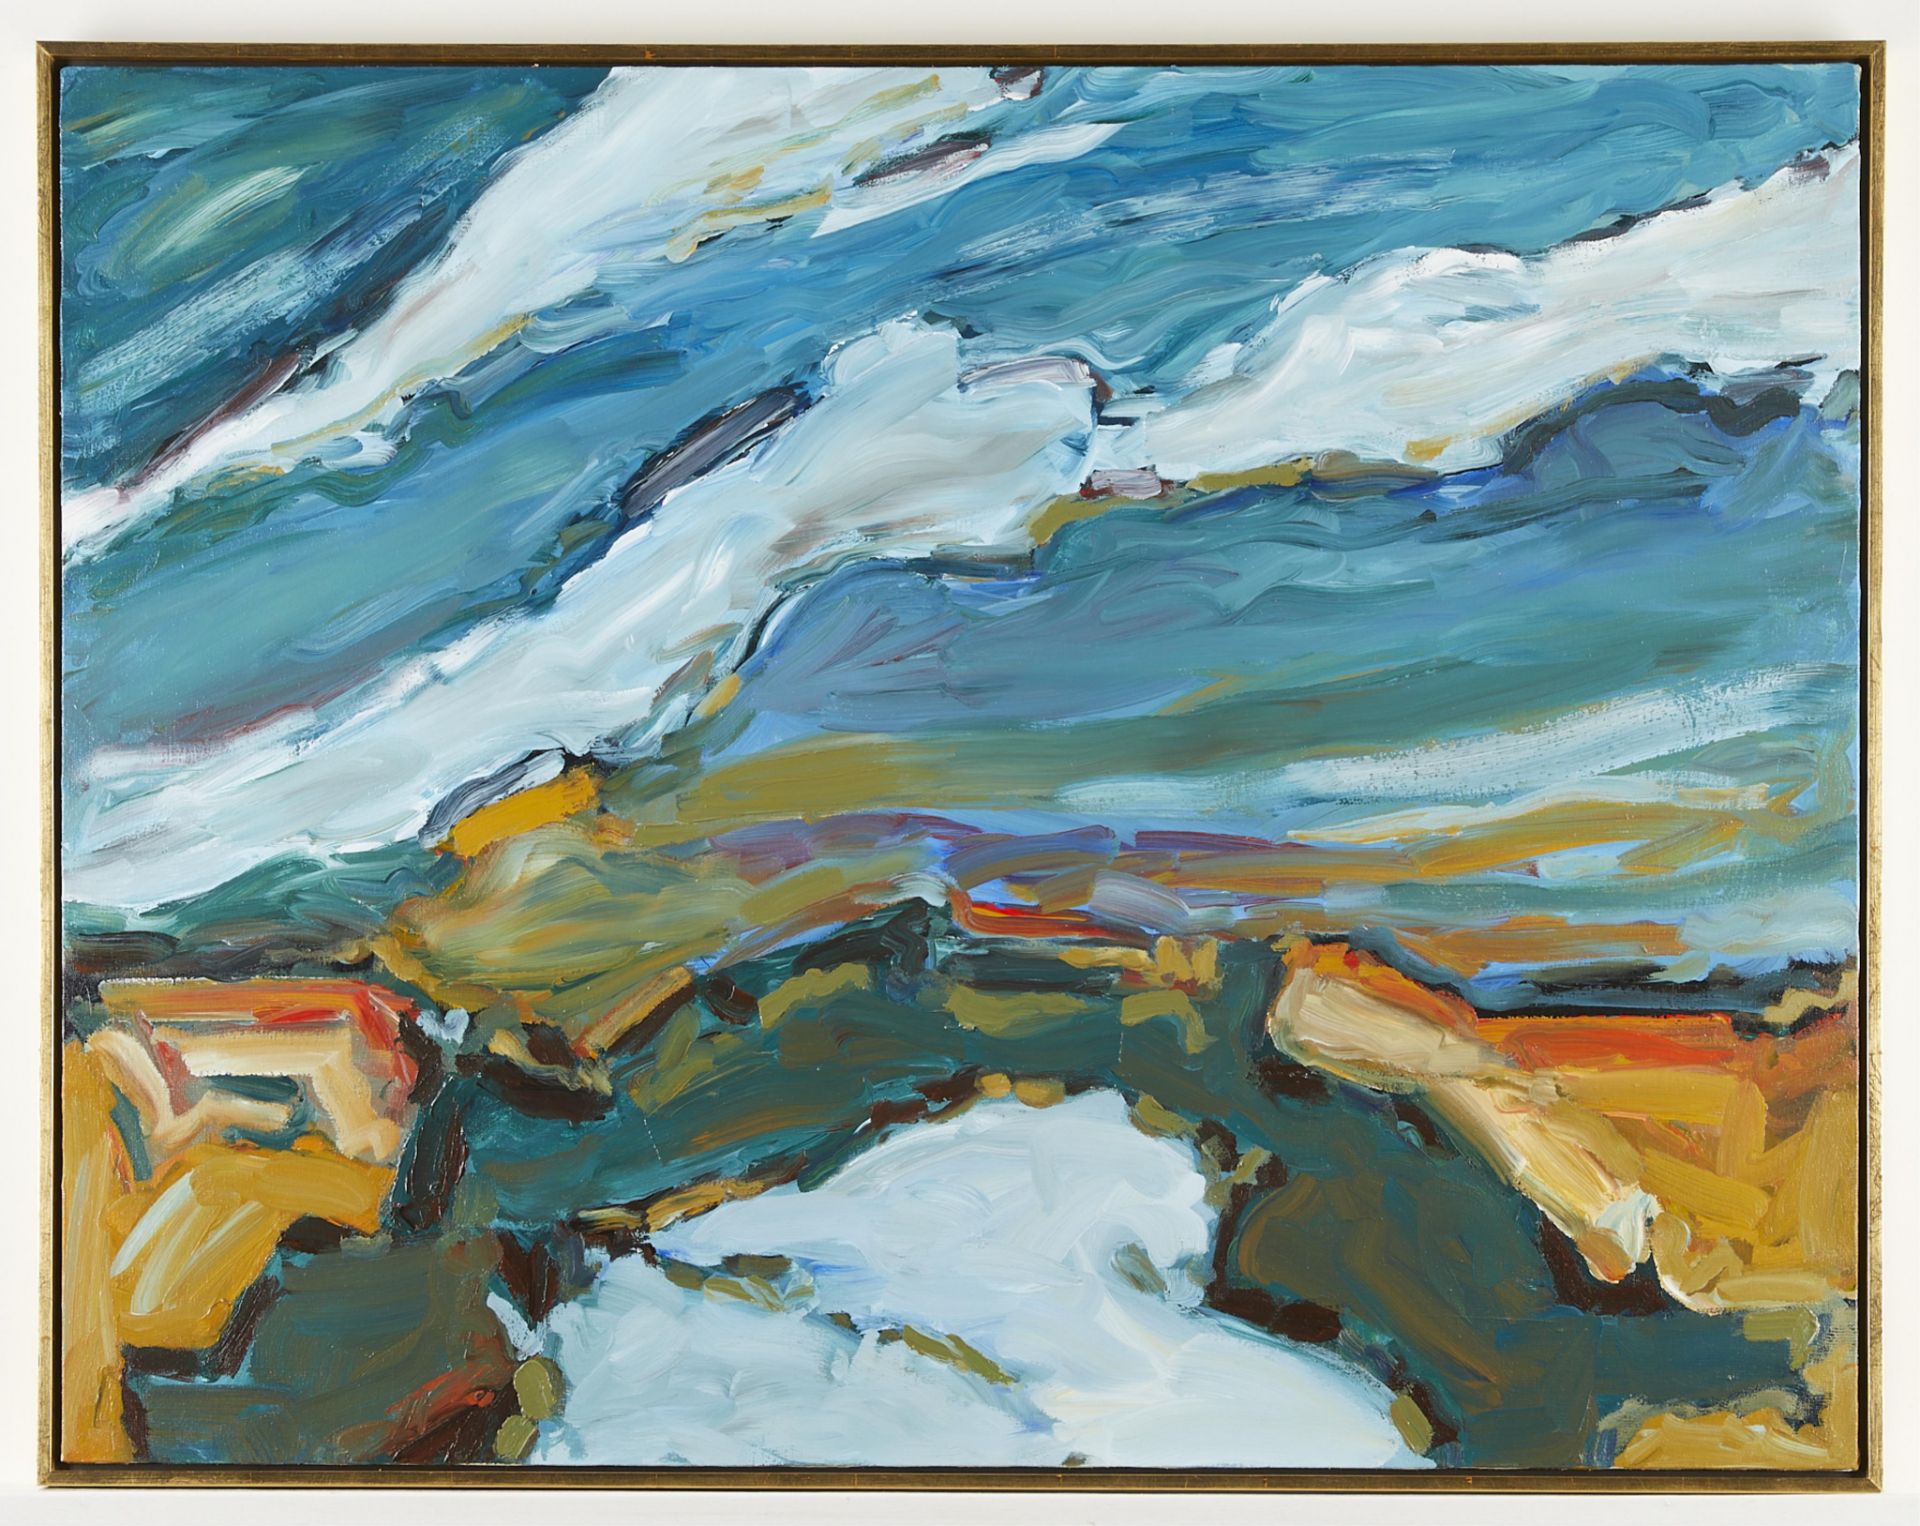 Dennis Dykema "Dark Sky" Landscape Painting 1989 - Image 3 of 8